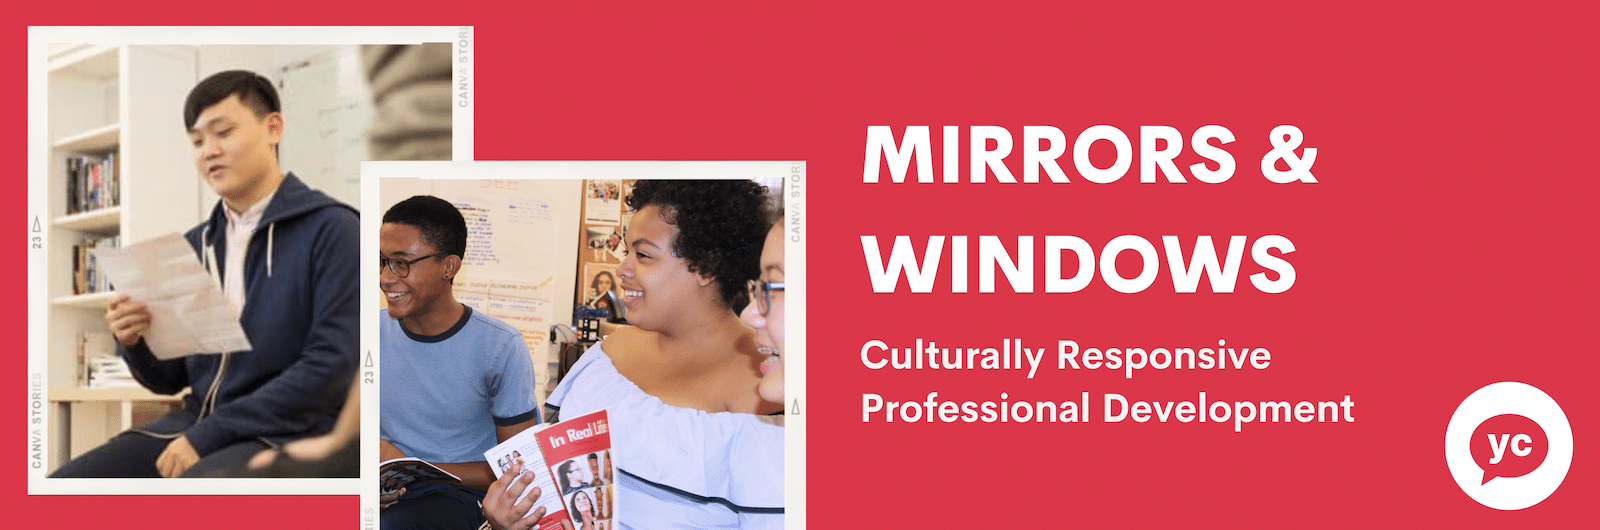 Mirrors & Windows: Culturally Responsive Professional Development